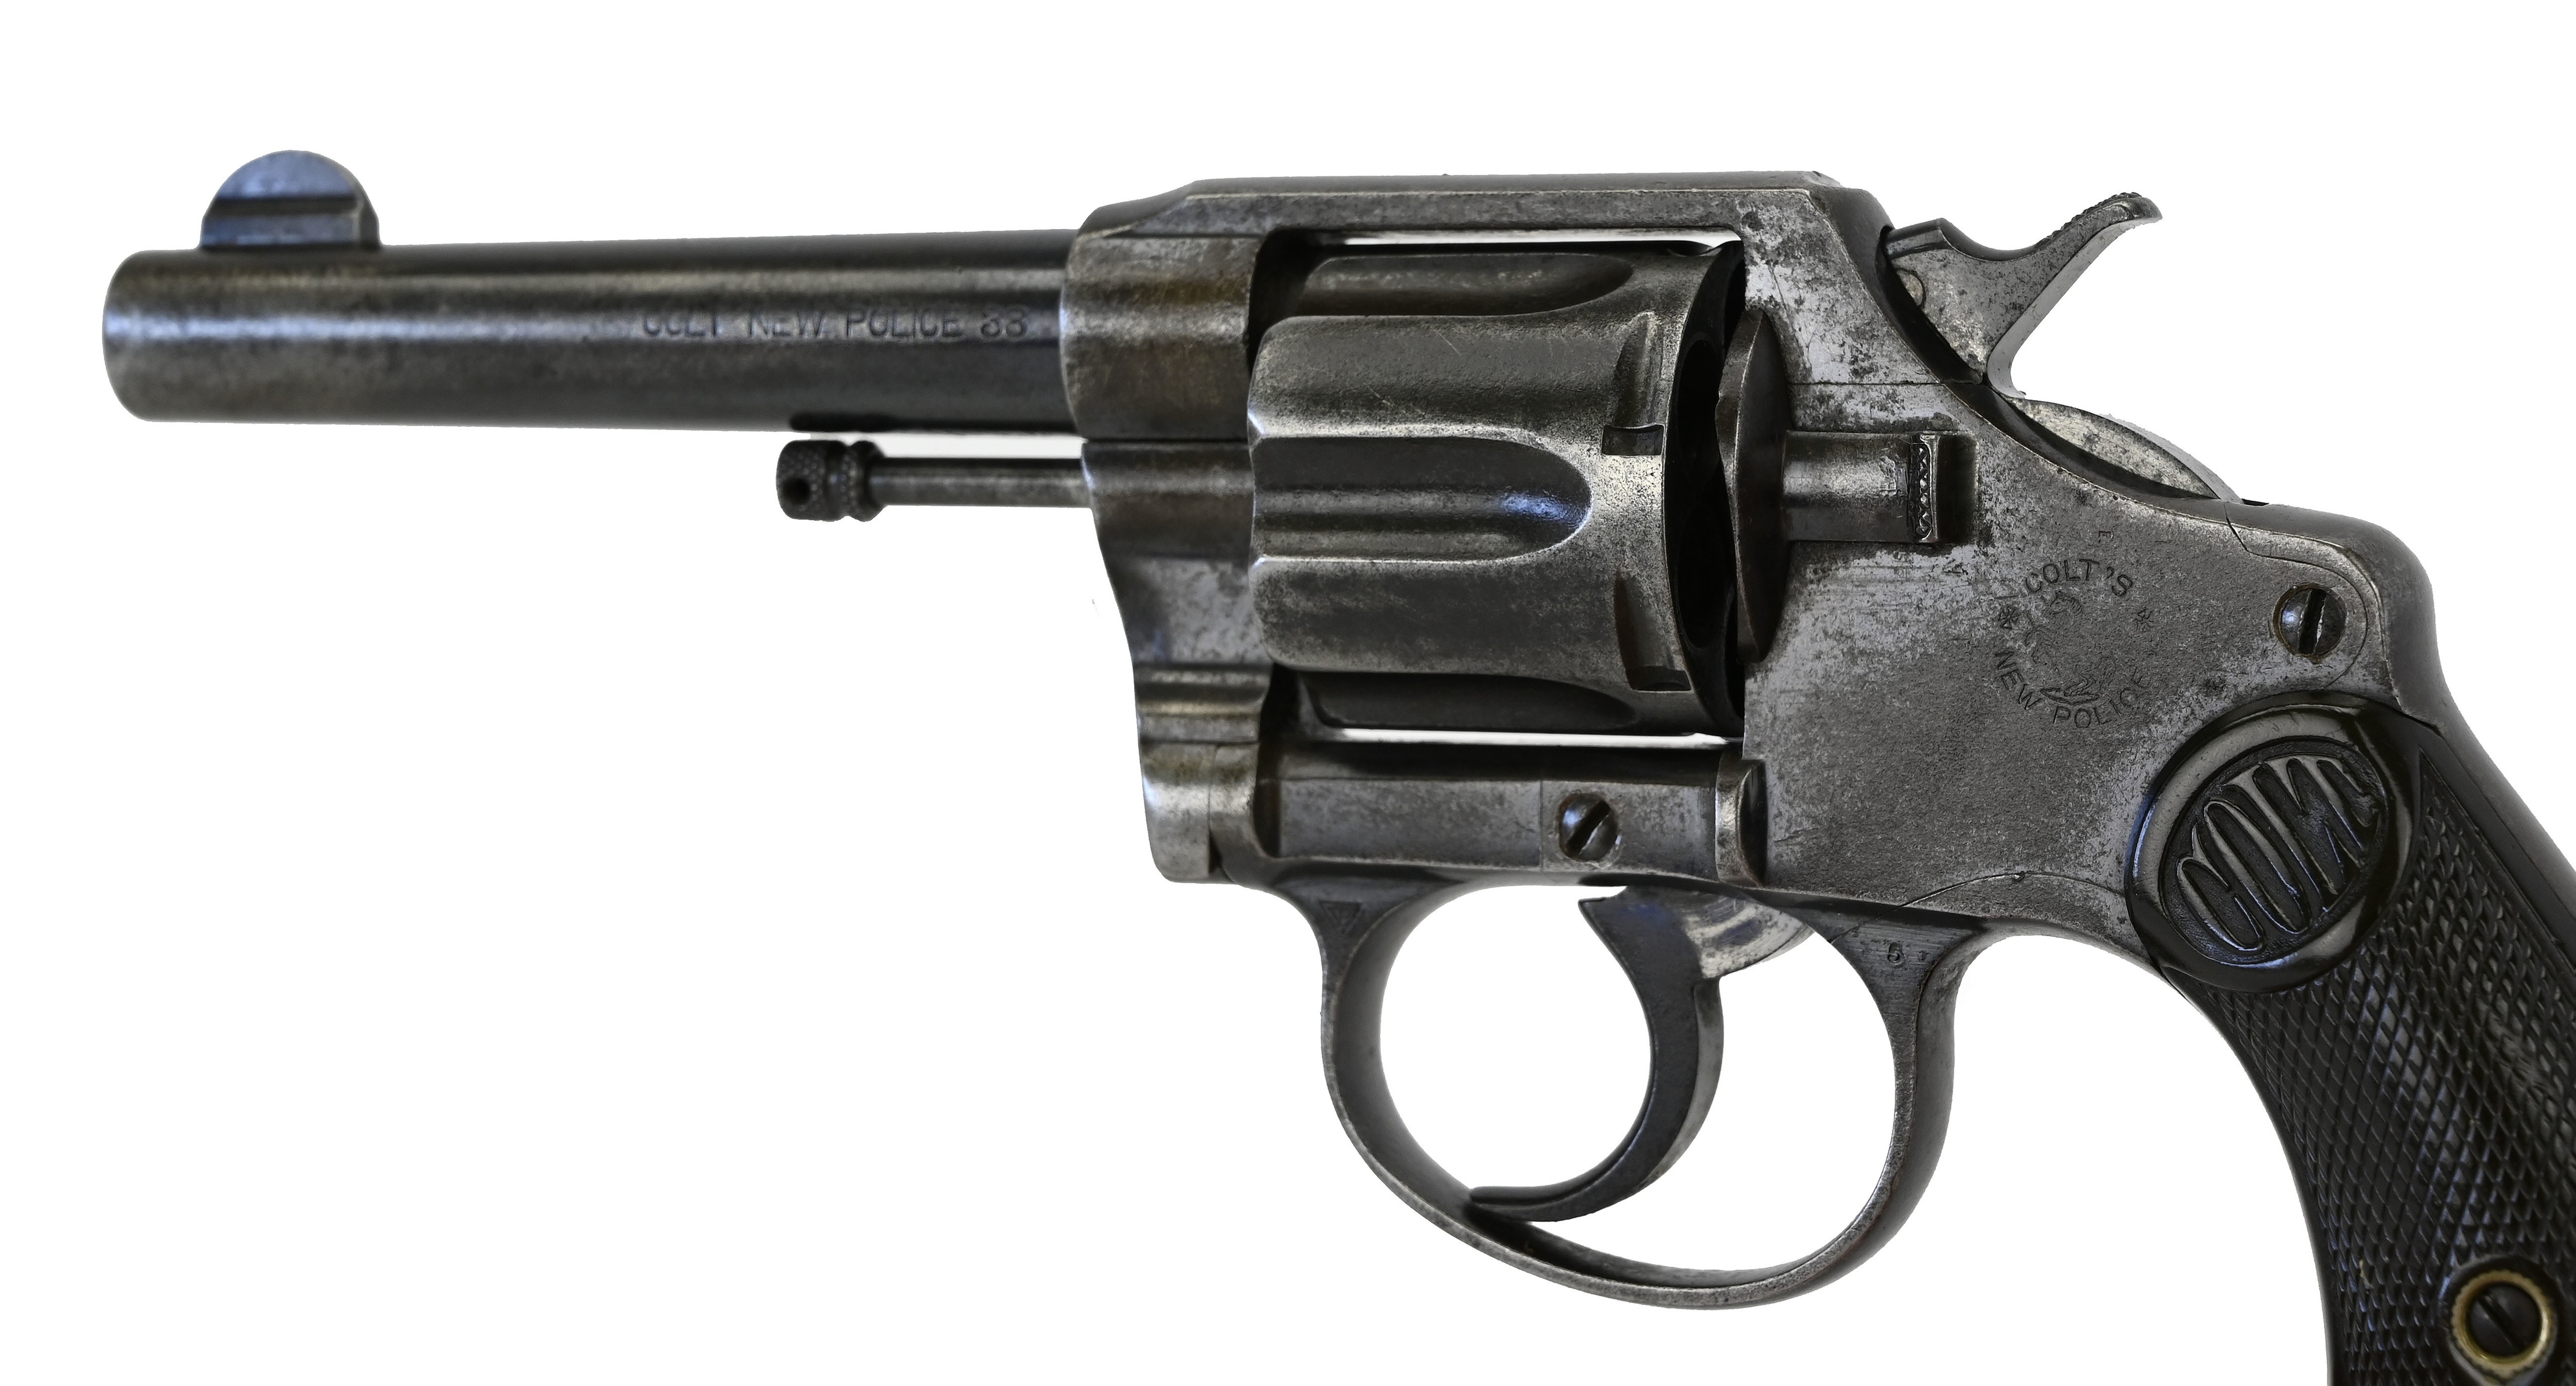 .38 calibre revolver long